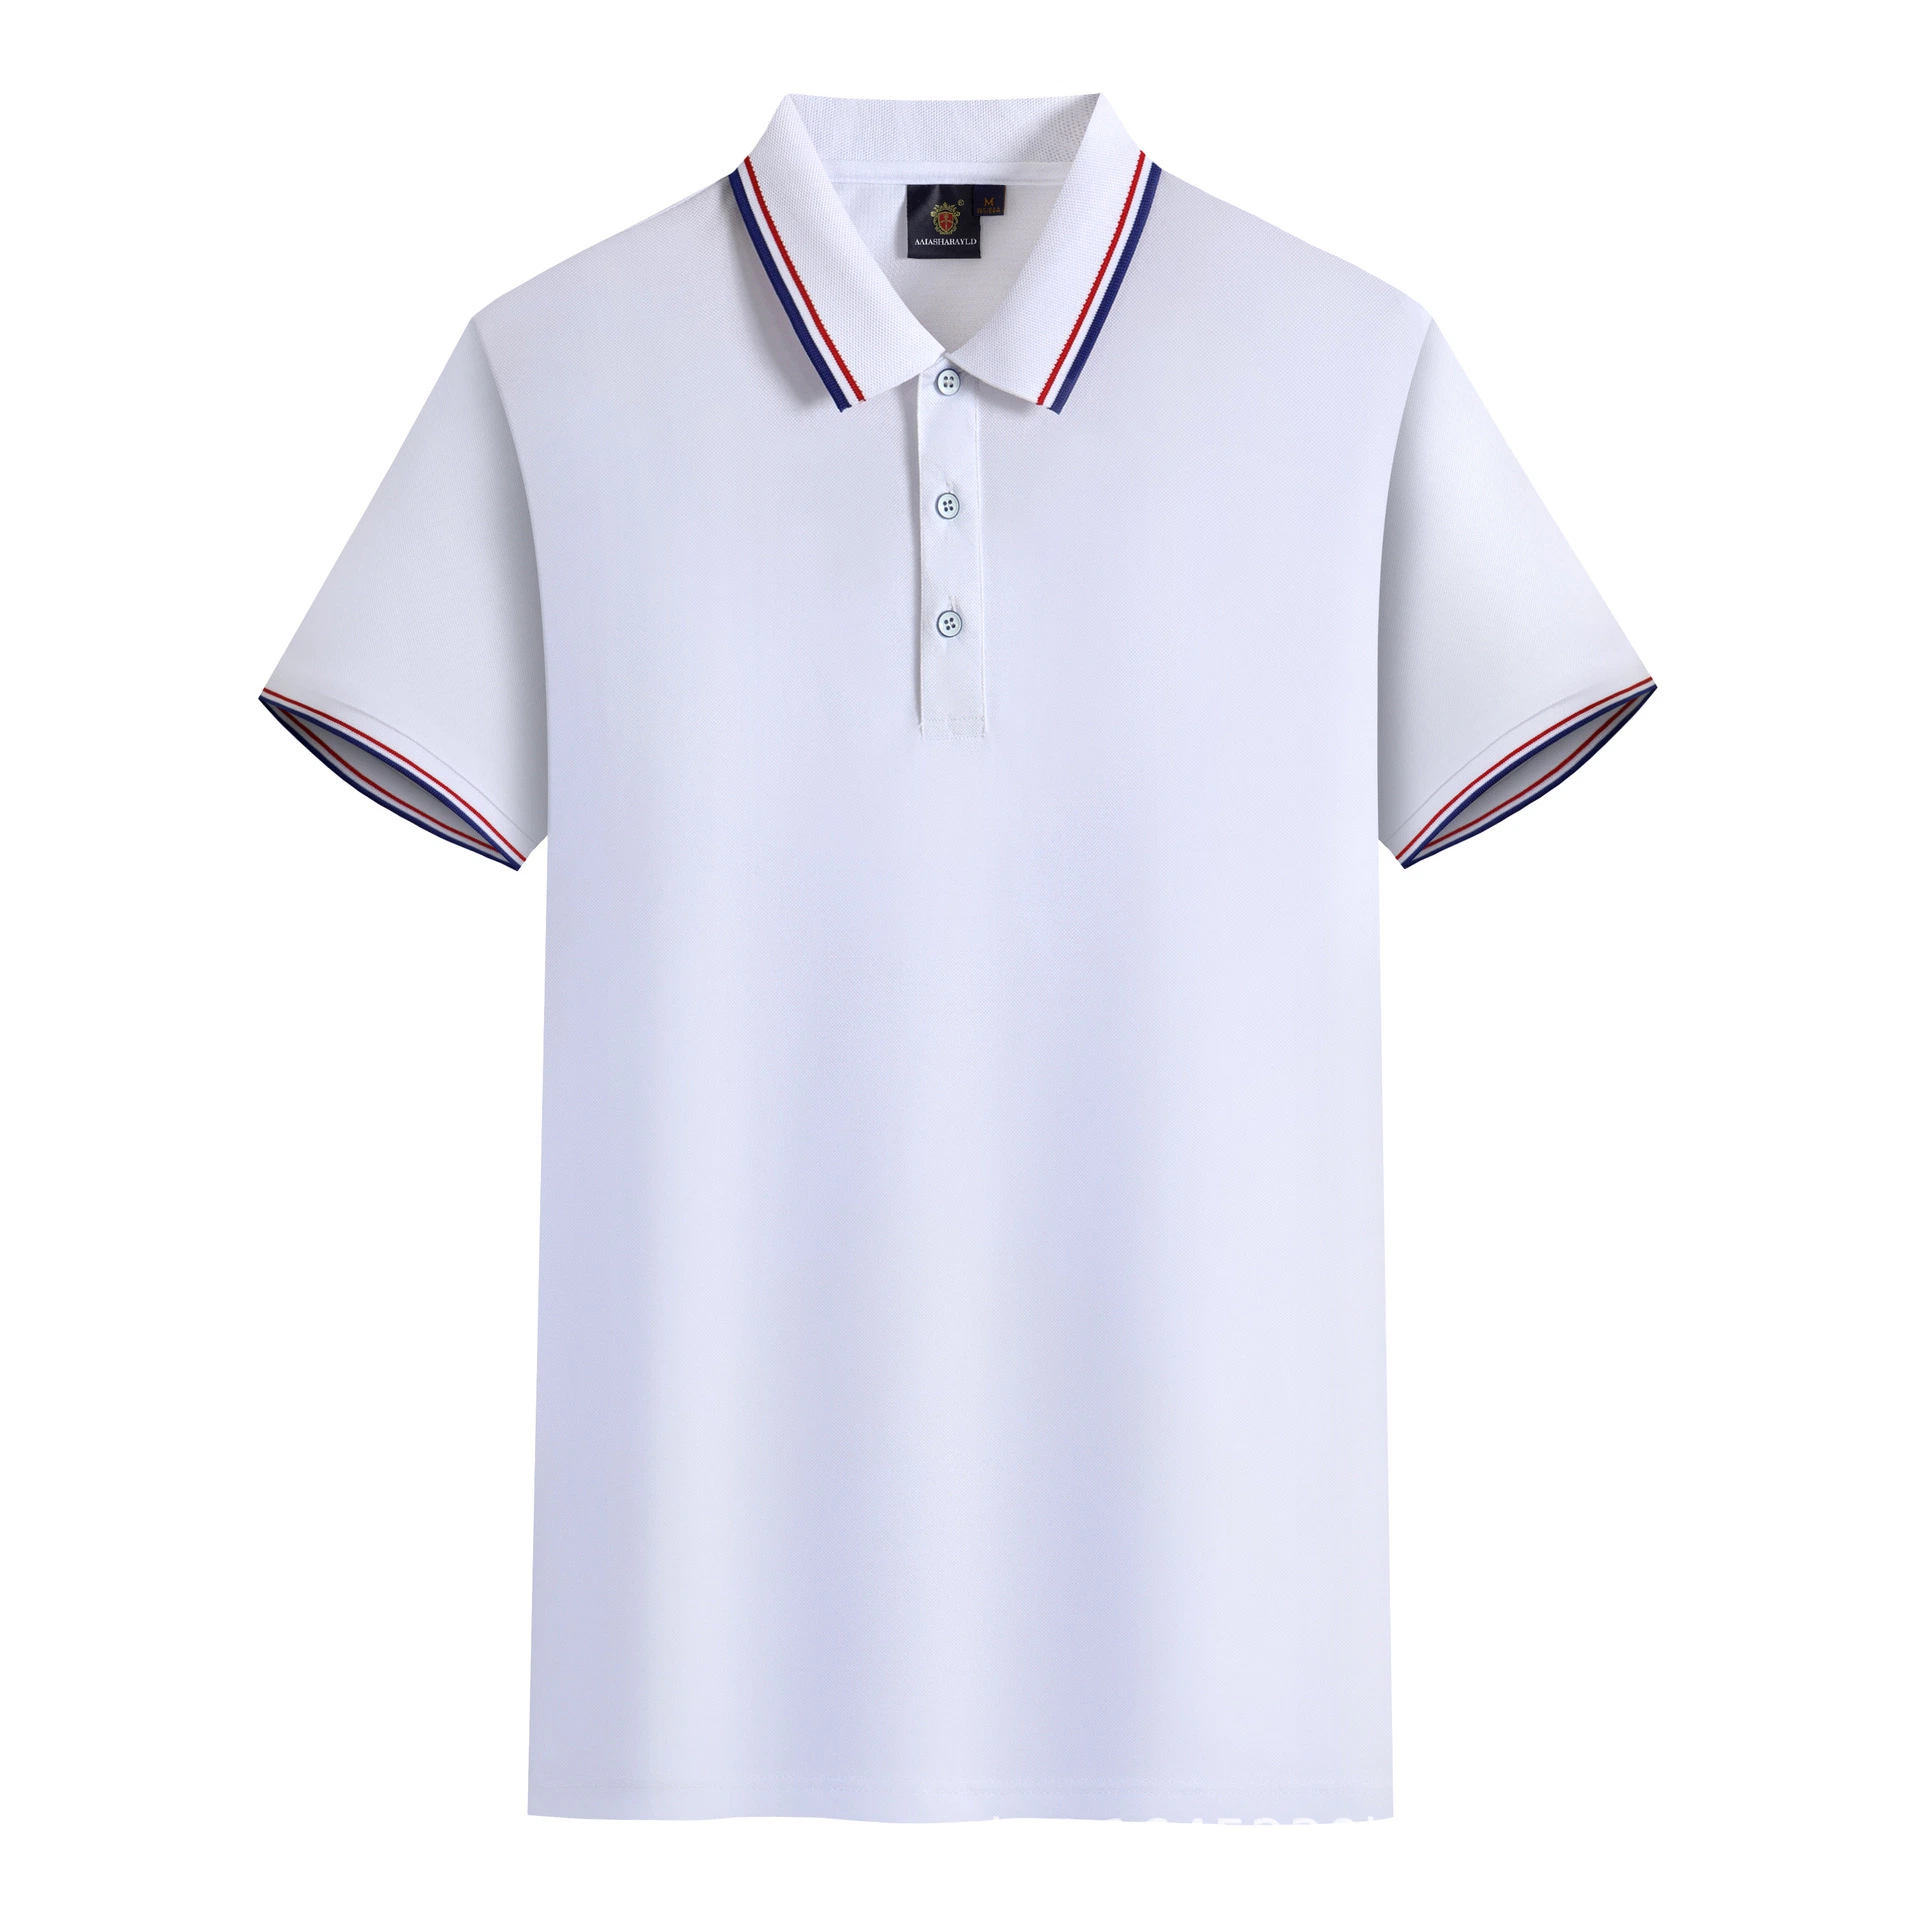 Wholesale Custom Printing Embroidery Logo Clothing Working Wear Uniform Sport Golf Men Polo Shirt